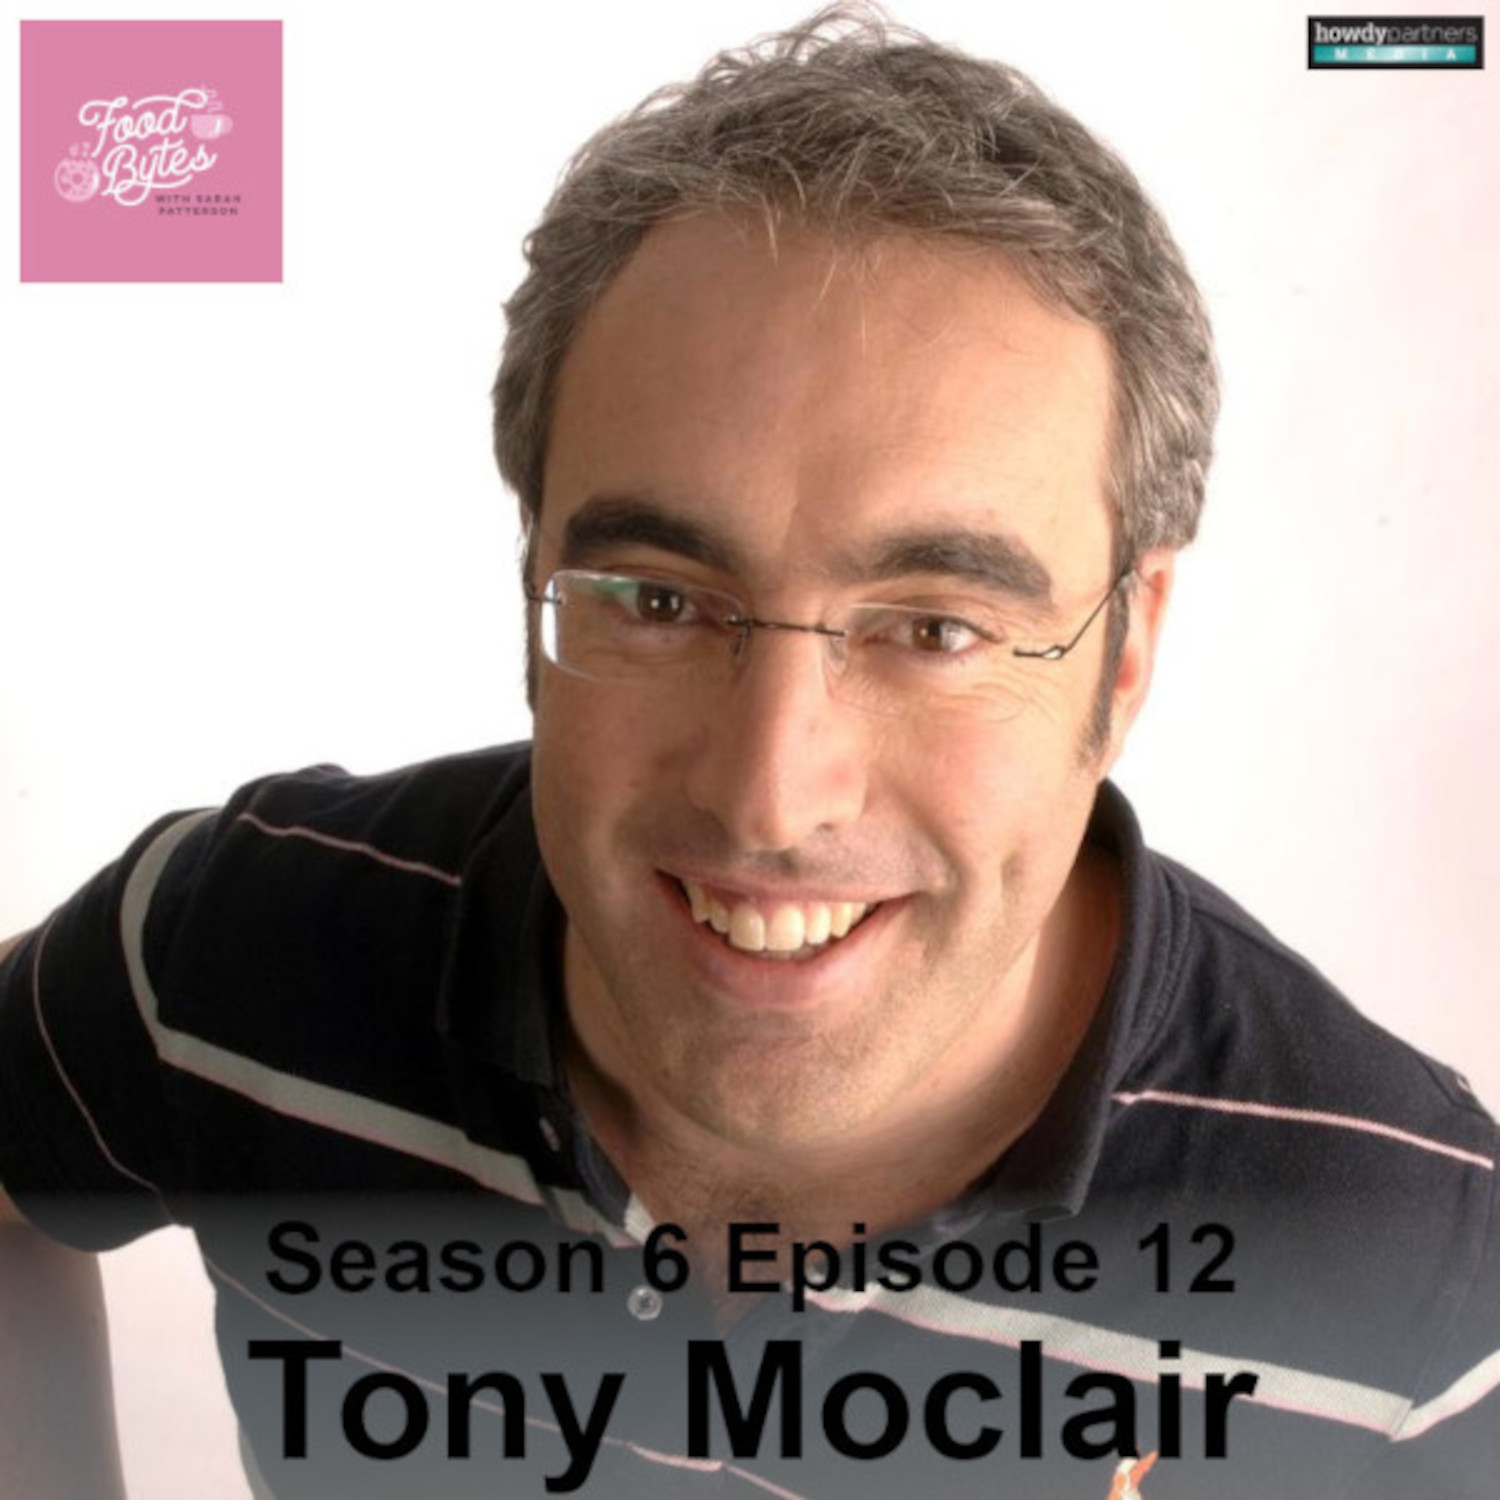 Tony Moclair